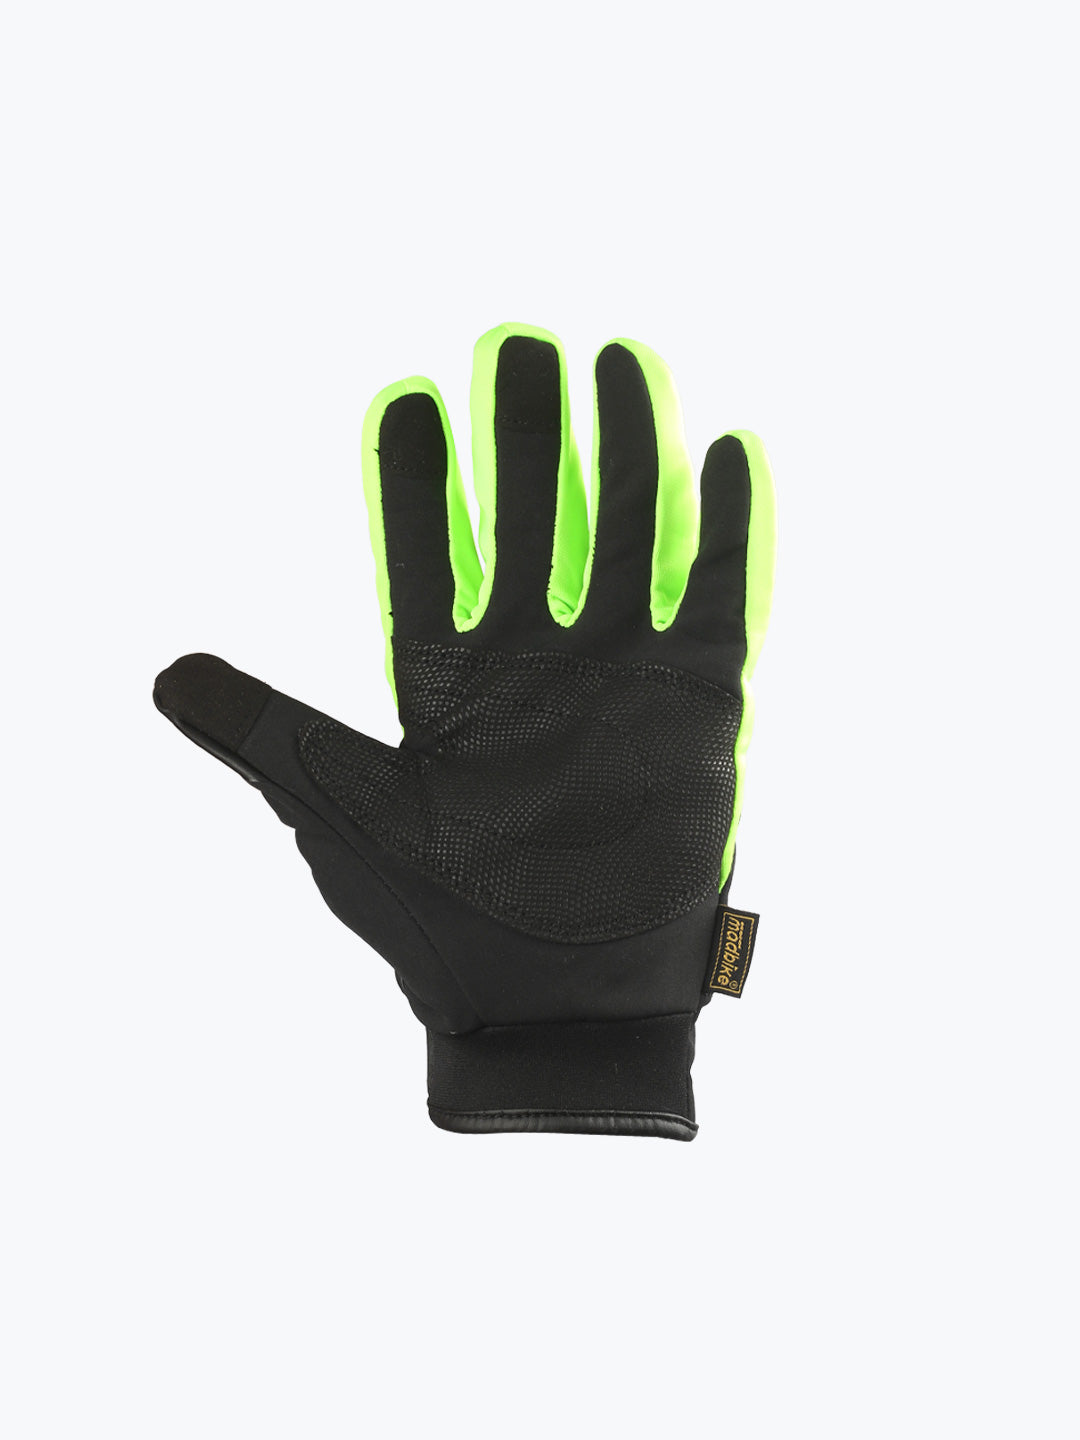 BSDDP City Gloves Touch Black & Green